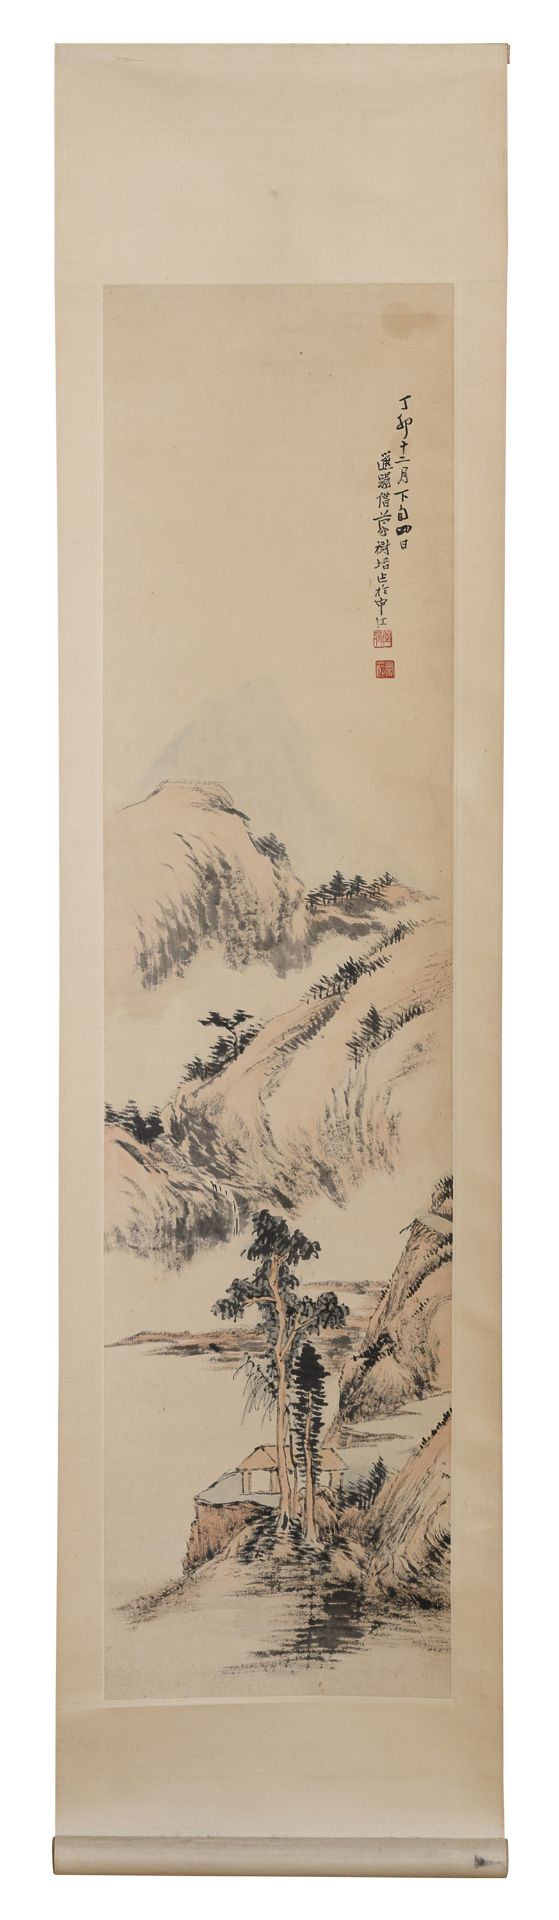 MENG SHOUZHI (China 1868 - 1937). FOUR SEASONS. FOUR MIXED MEDIA ON PAPER